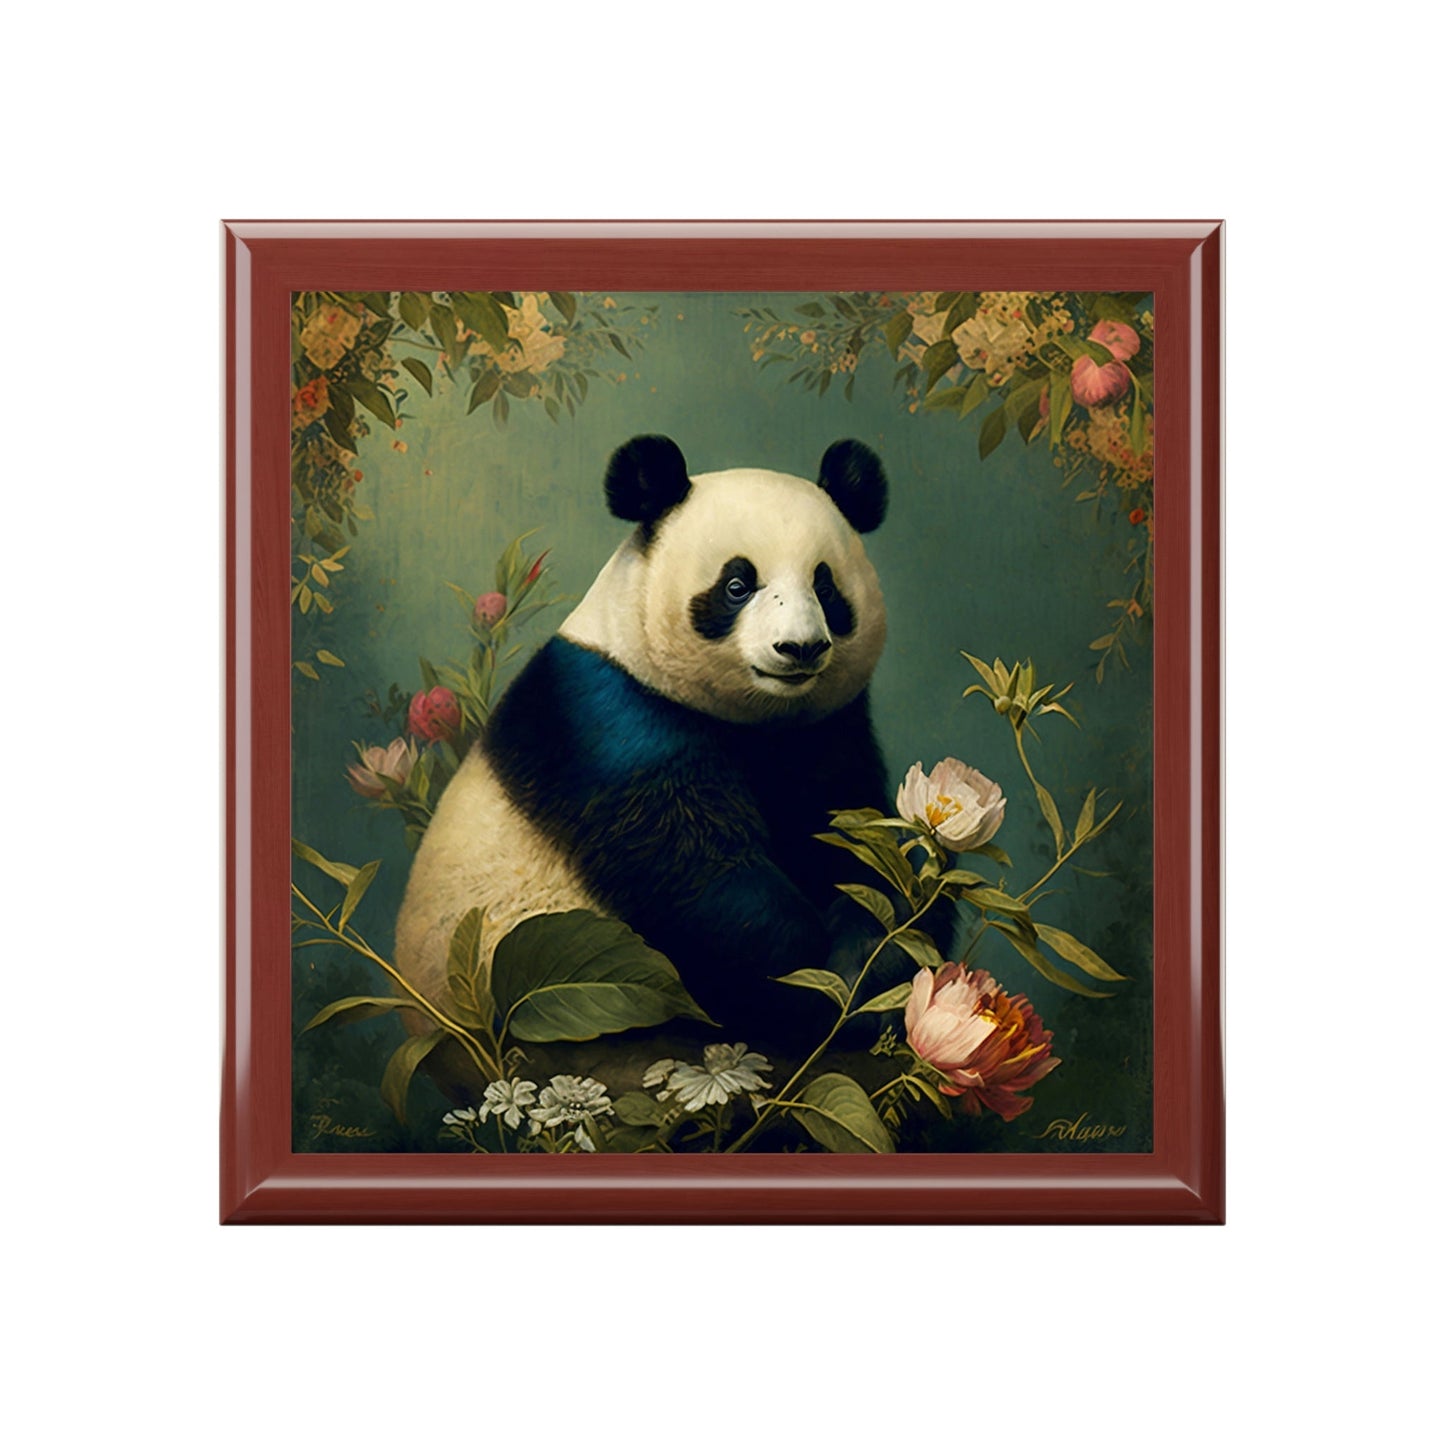 Vintage Panda Wooden Keepsake Jewelry Box